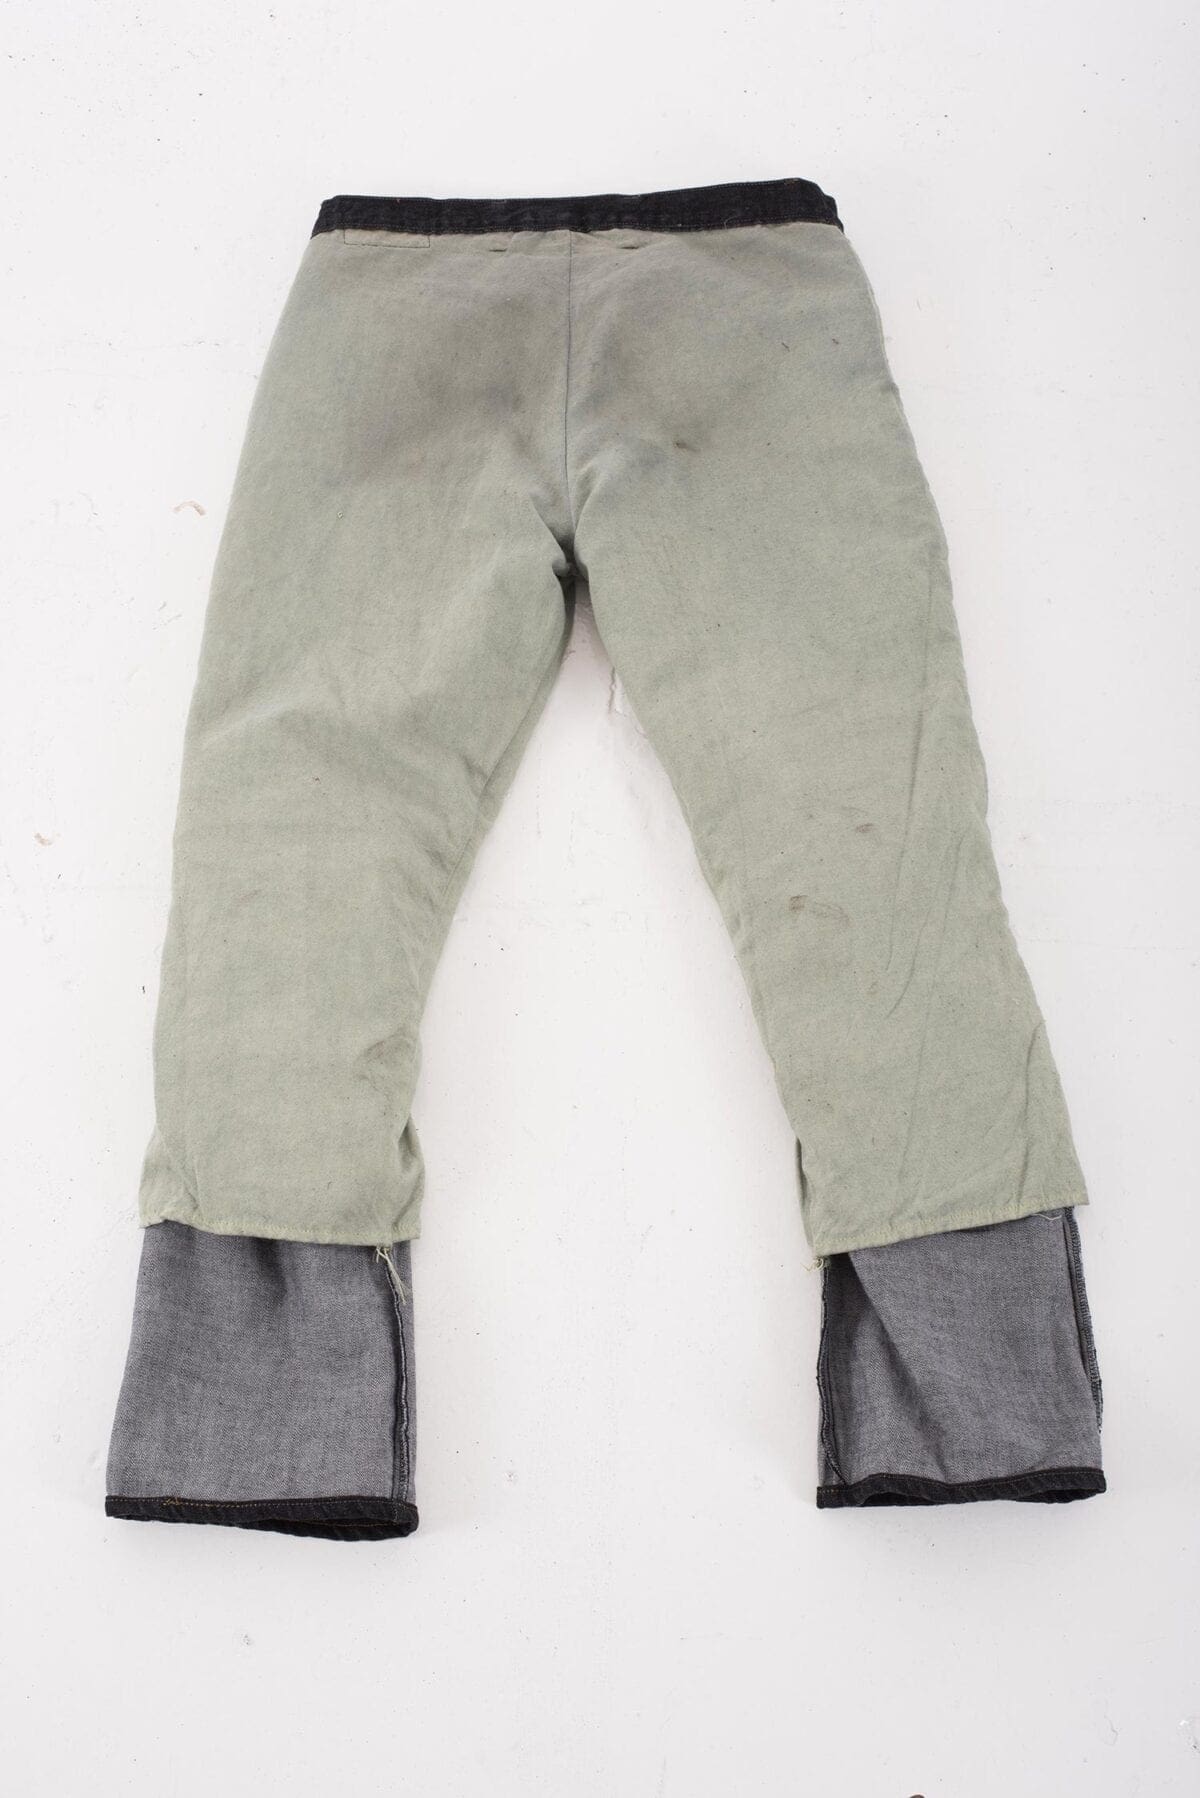 084_Hood-K7-para-aramid-jeans-015